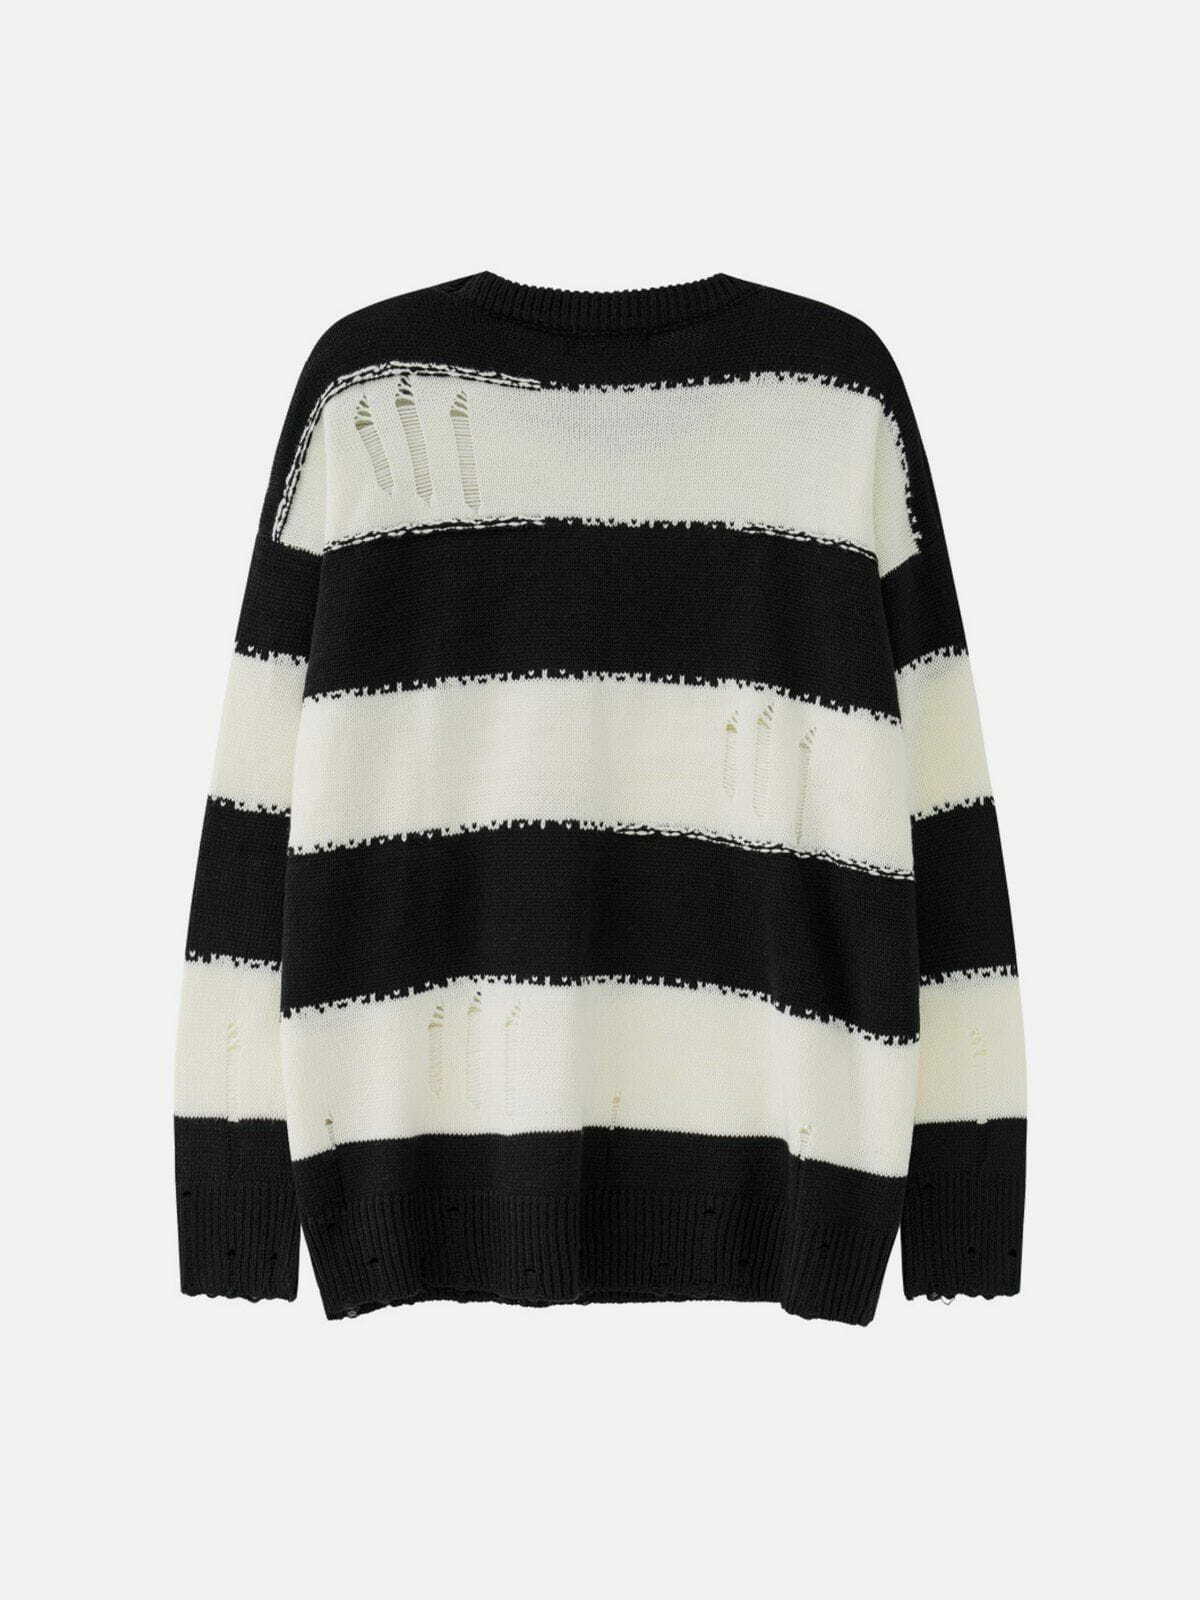 ripped jacquard sweater edgy streetwear staple 2034